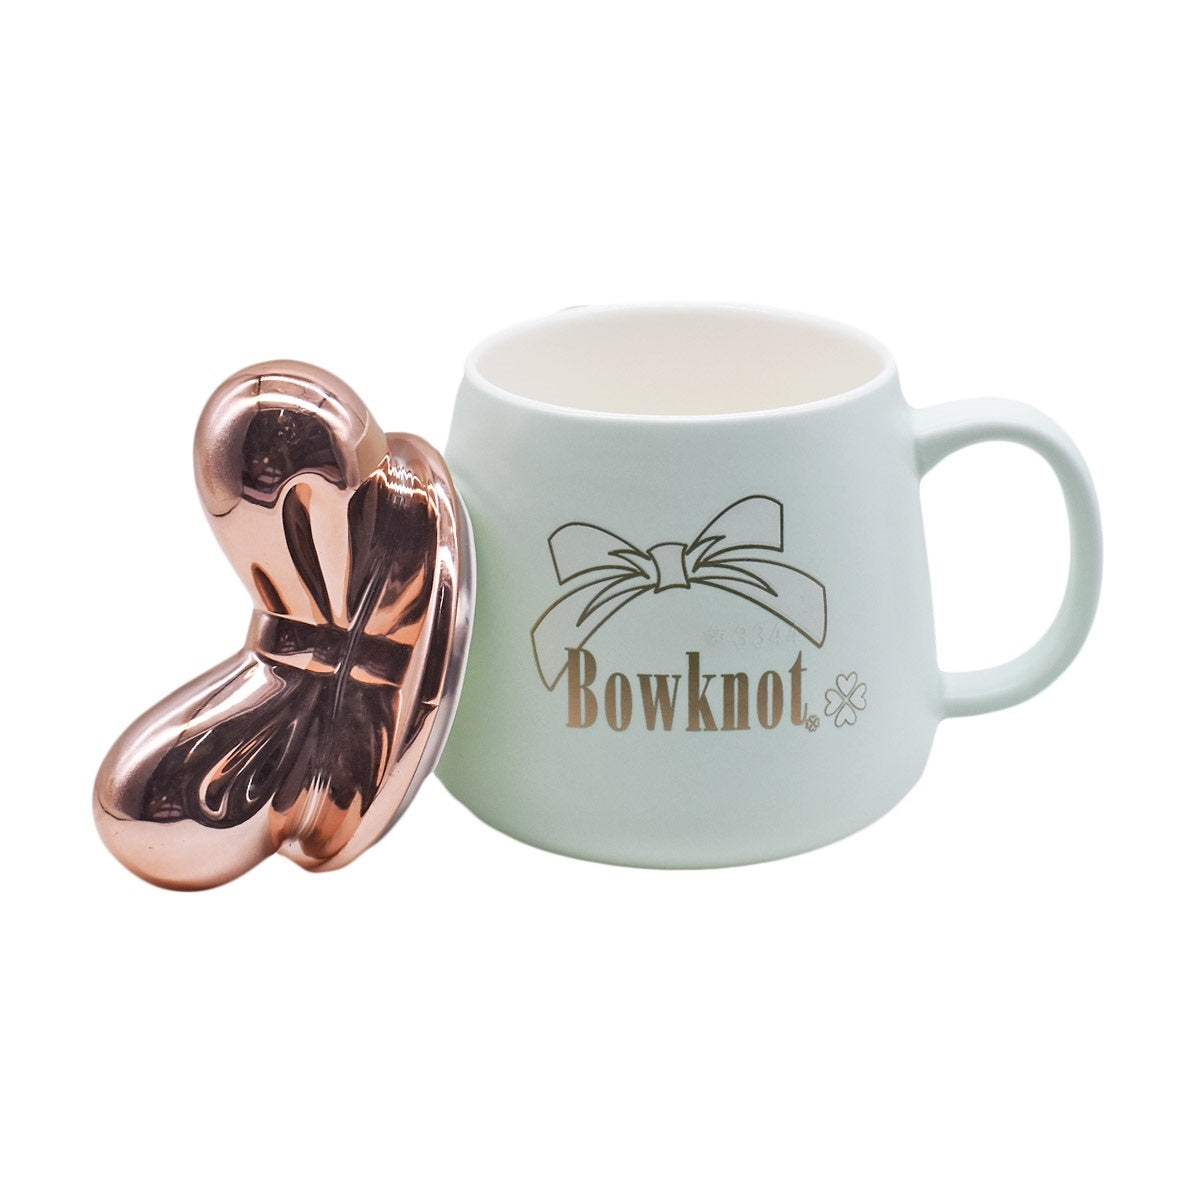 Fancy Ceramic Coffee or Tea Mug with Lid and Handle (8519)